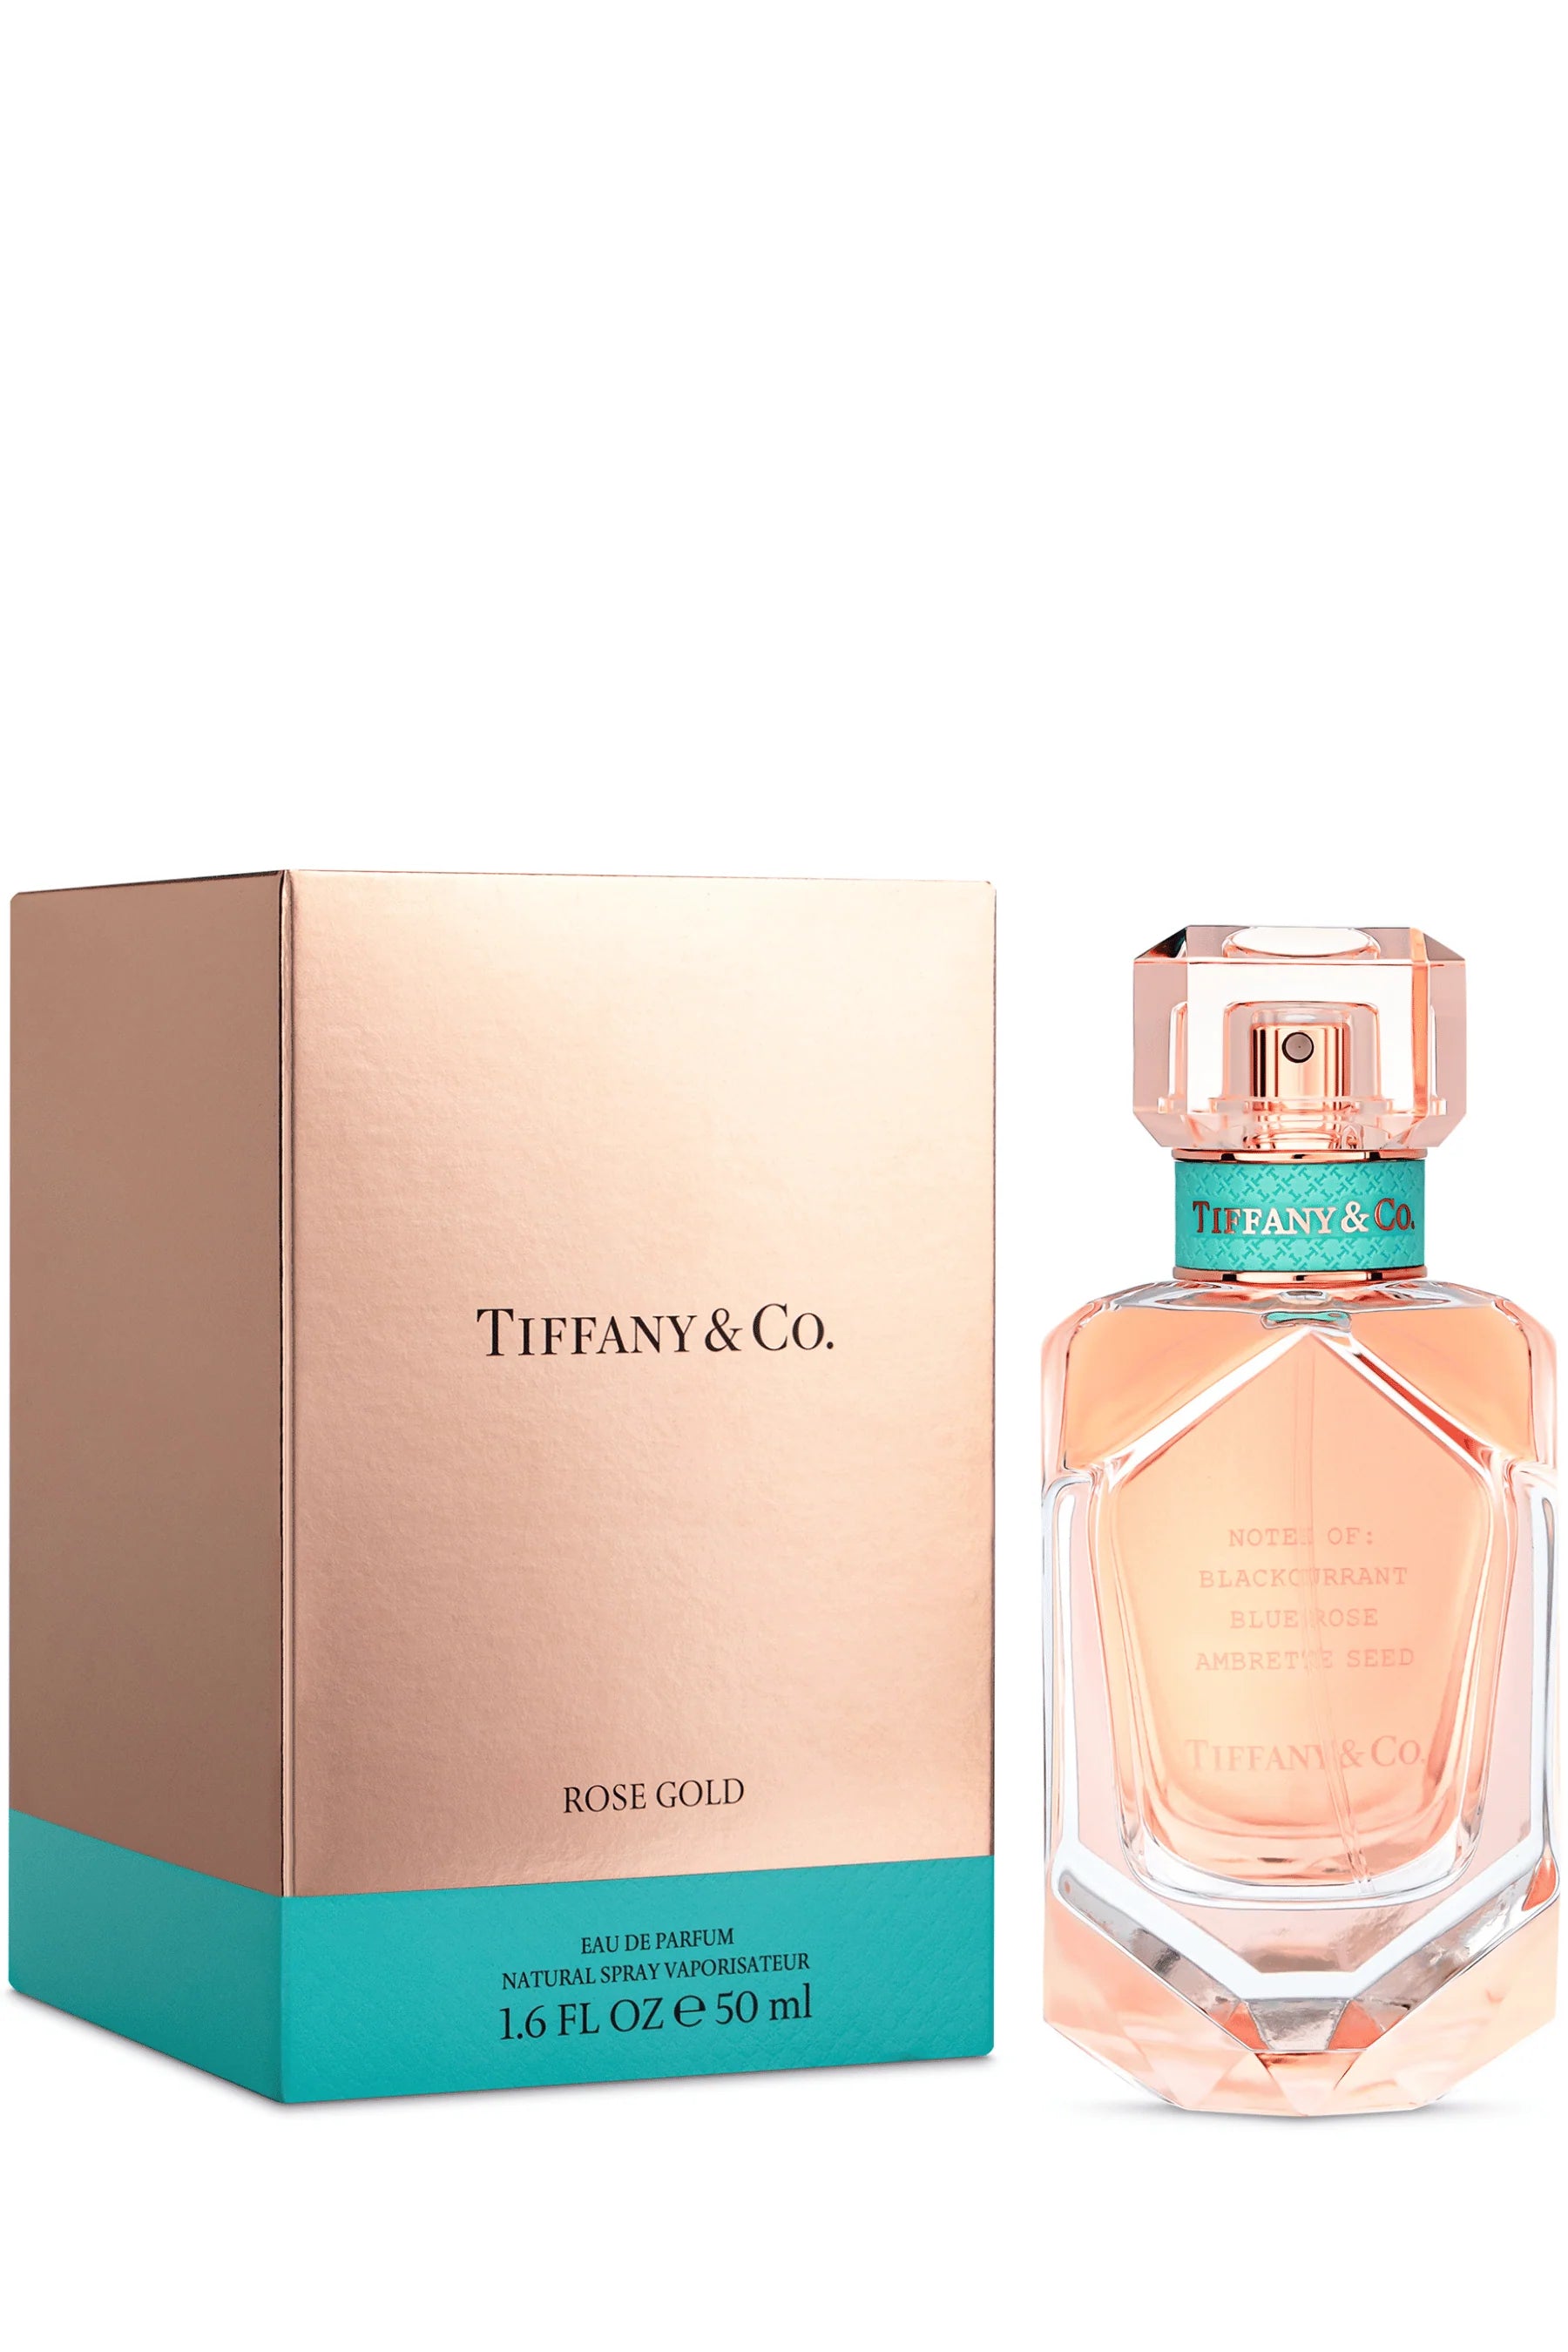 Rose Gold Eau de Parfum Spray for Women by Tiffany $ Co, Product image 1